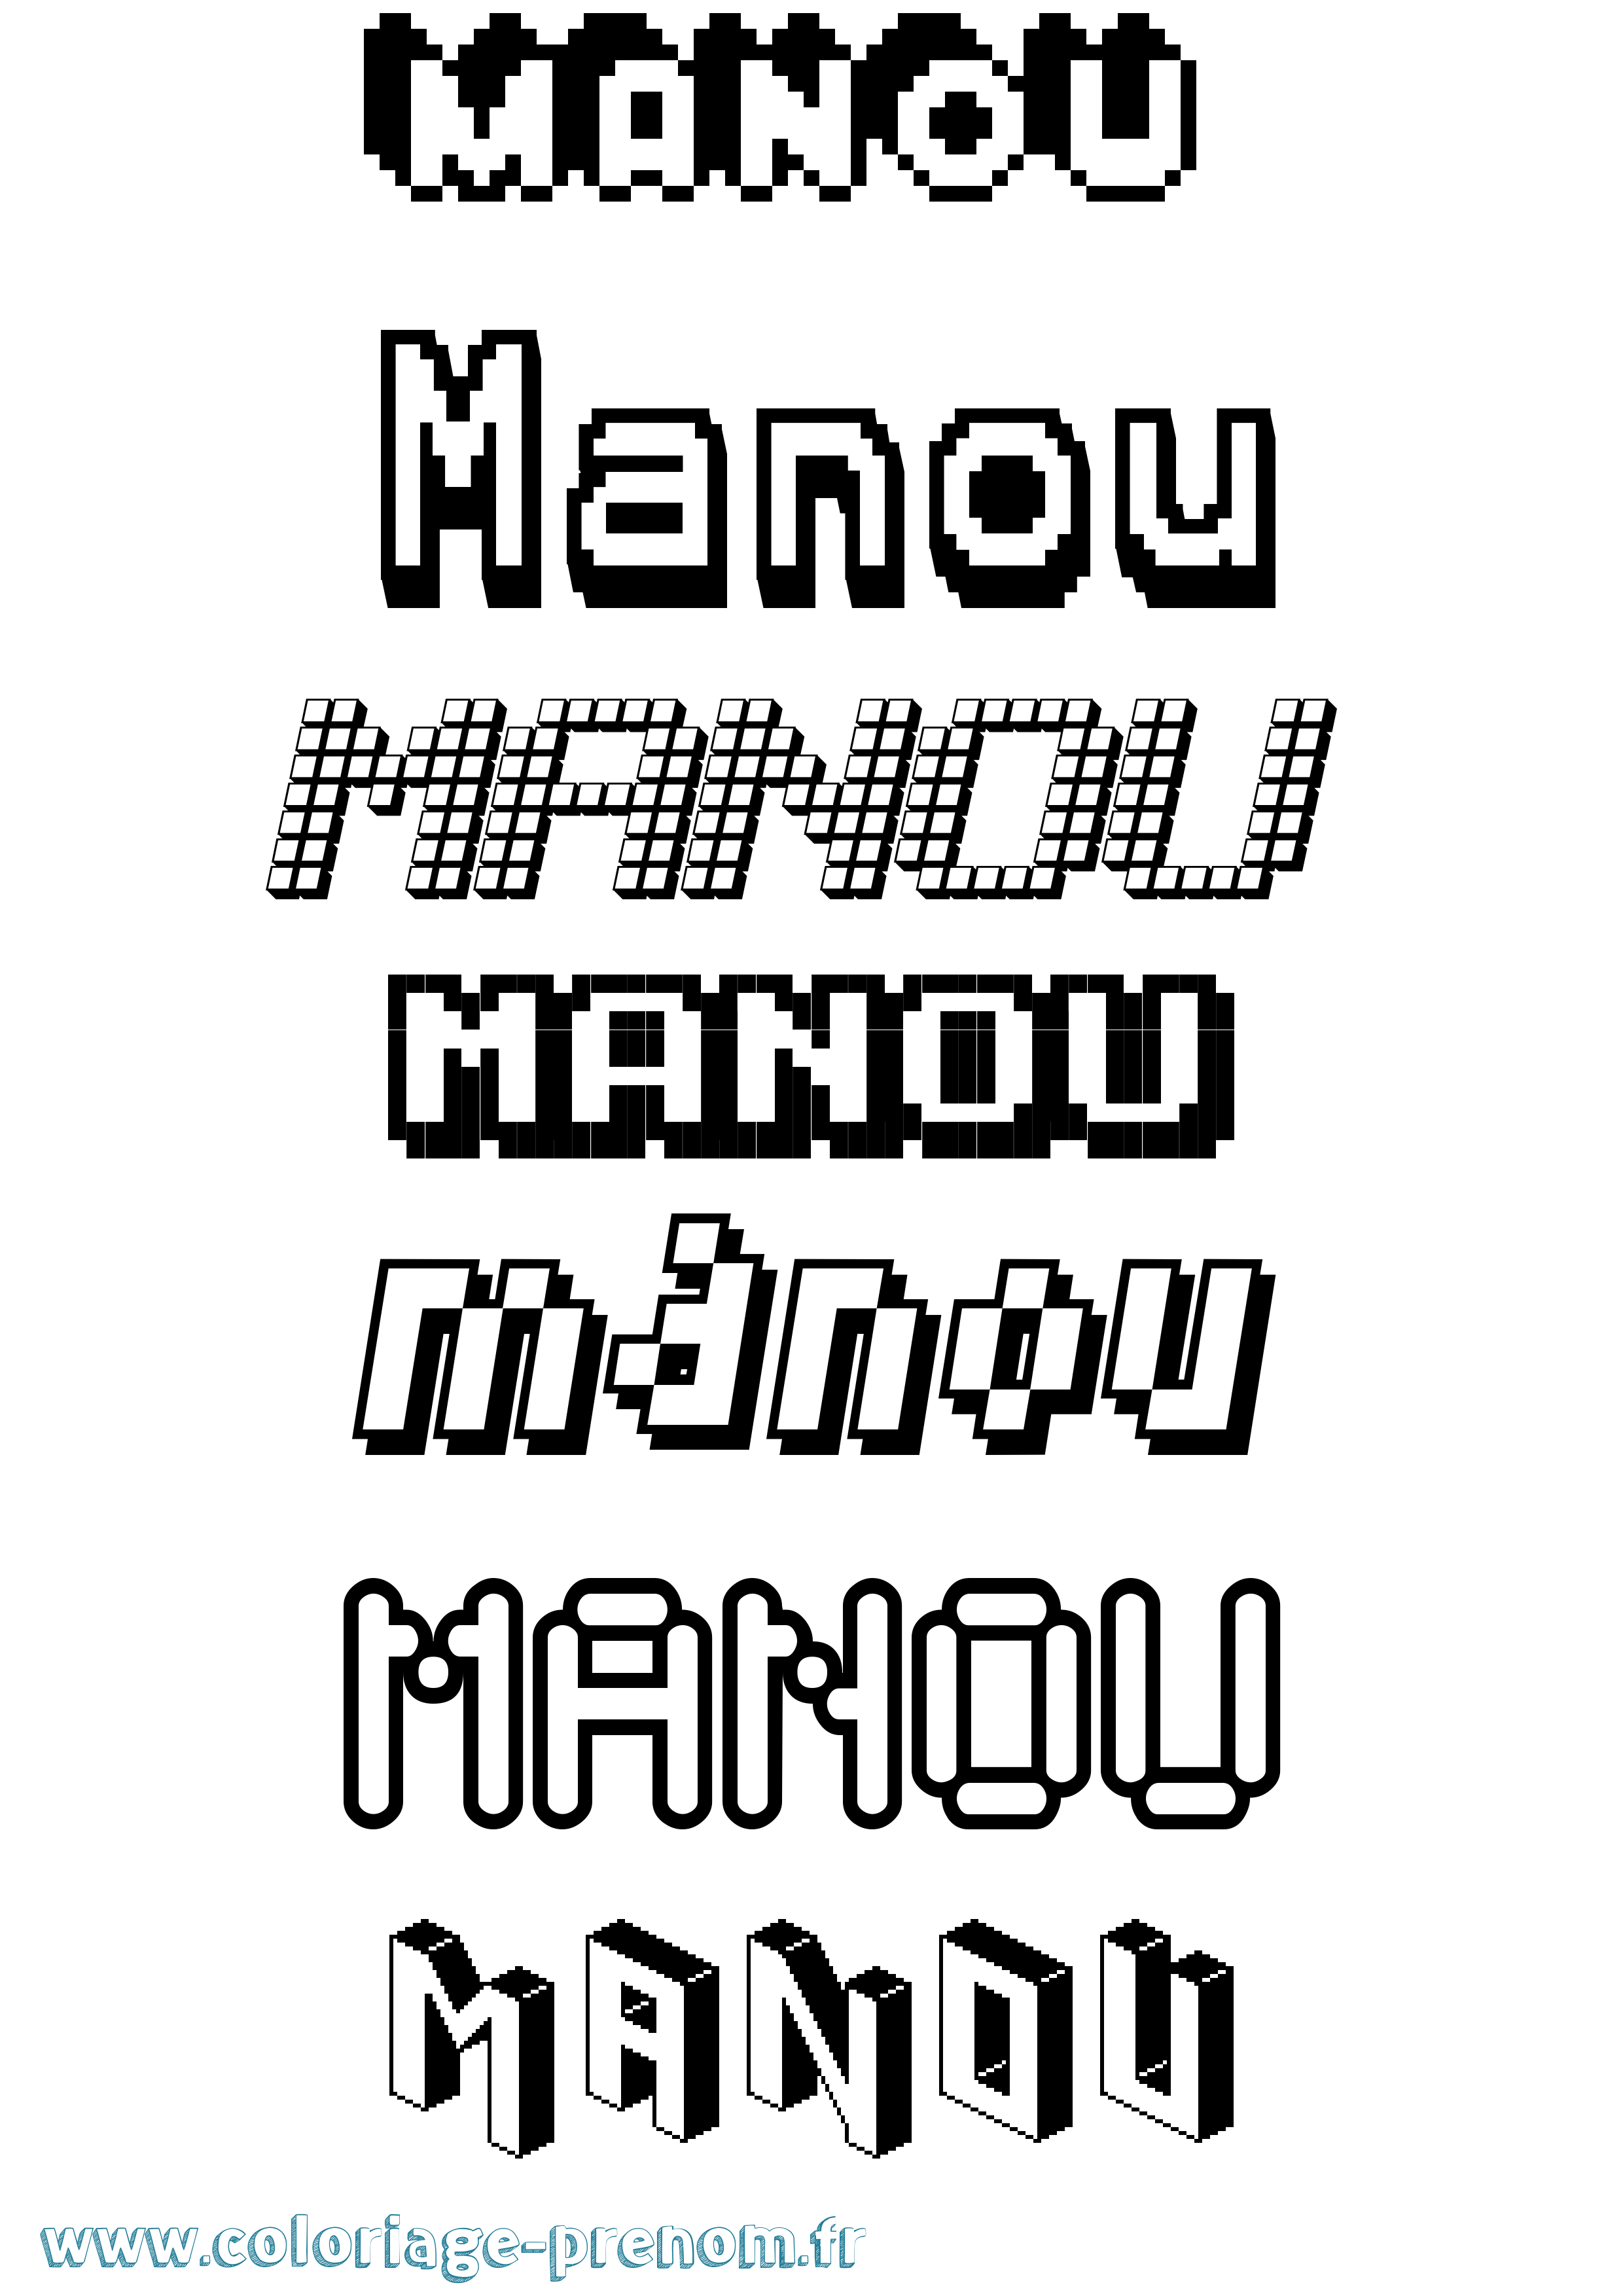 Coloriage prénom Manou Pixel